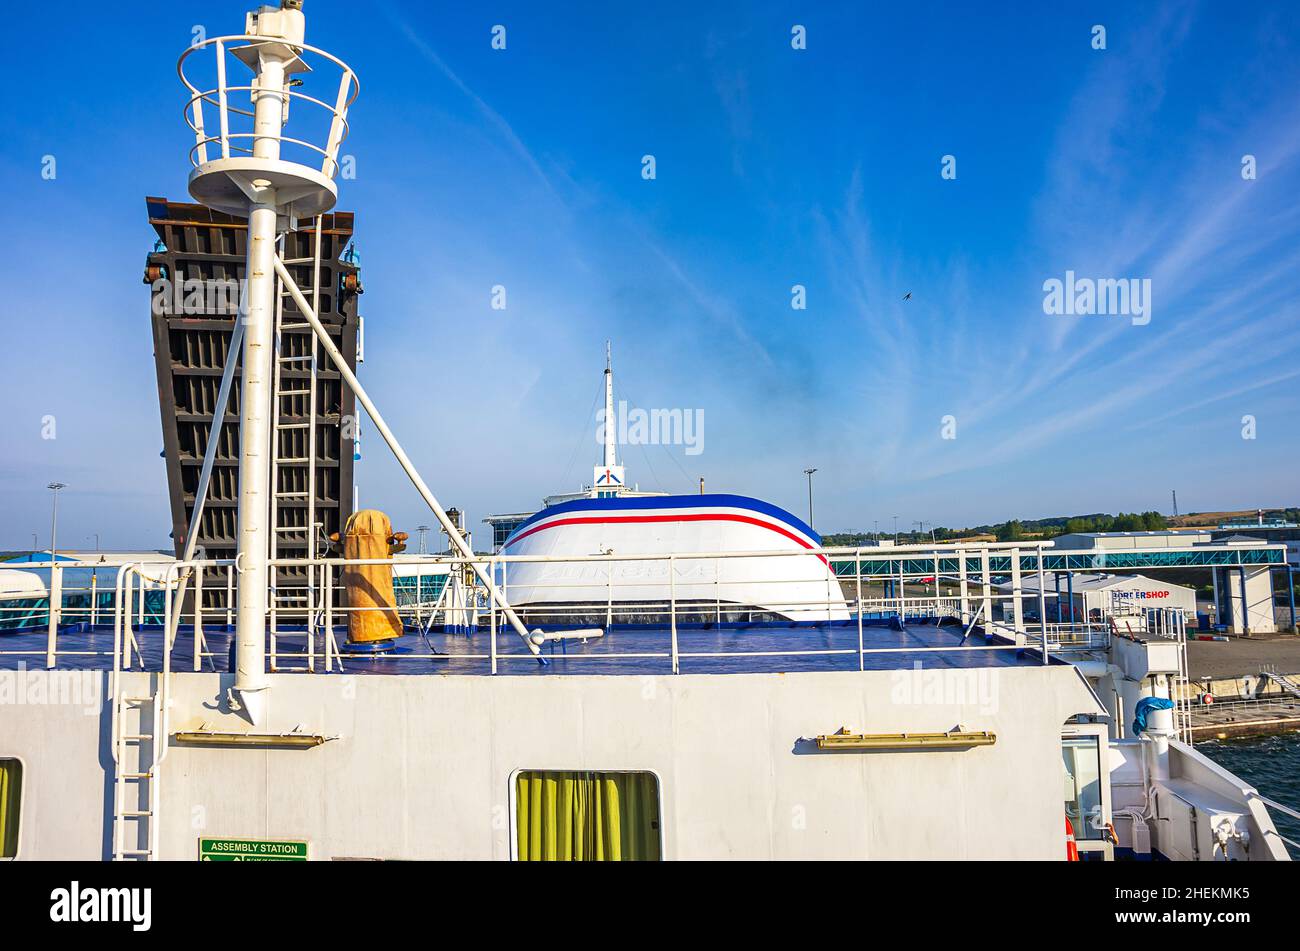 Sassnitz-Mukran Ferry Port, Mecklenburg-Western Pomerania, Germany - August 9, 2014: View of the ferry port across the bow of the rail ferry SASSNITZ. Stock Photo